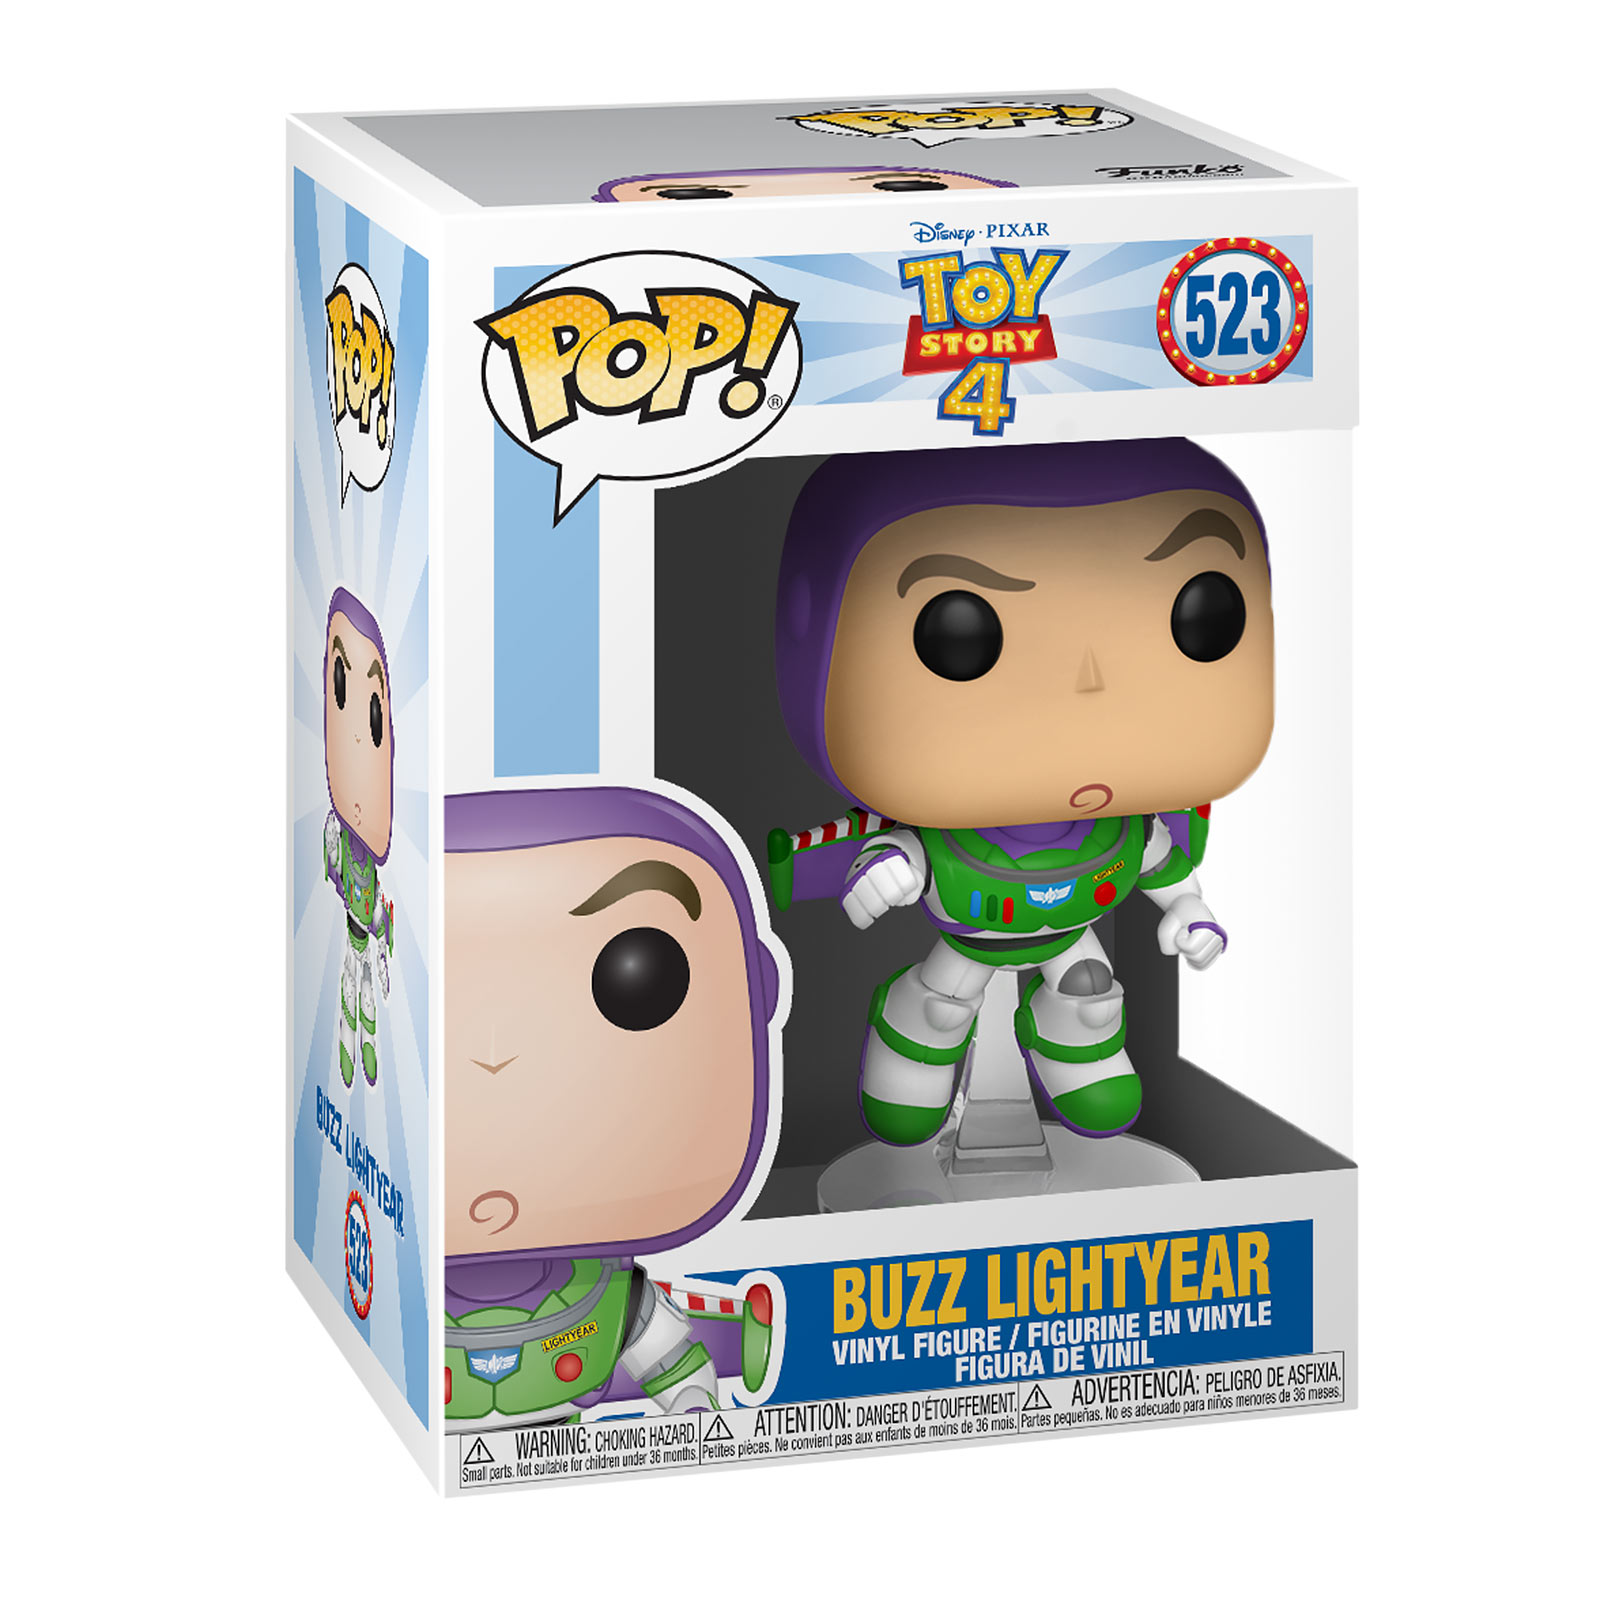 Toy Story - Buzz Lightyear Funko Pop figure